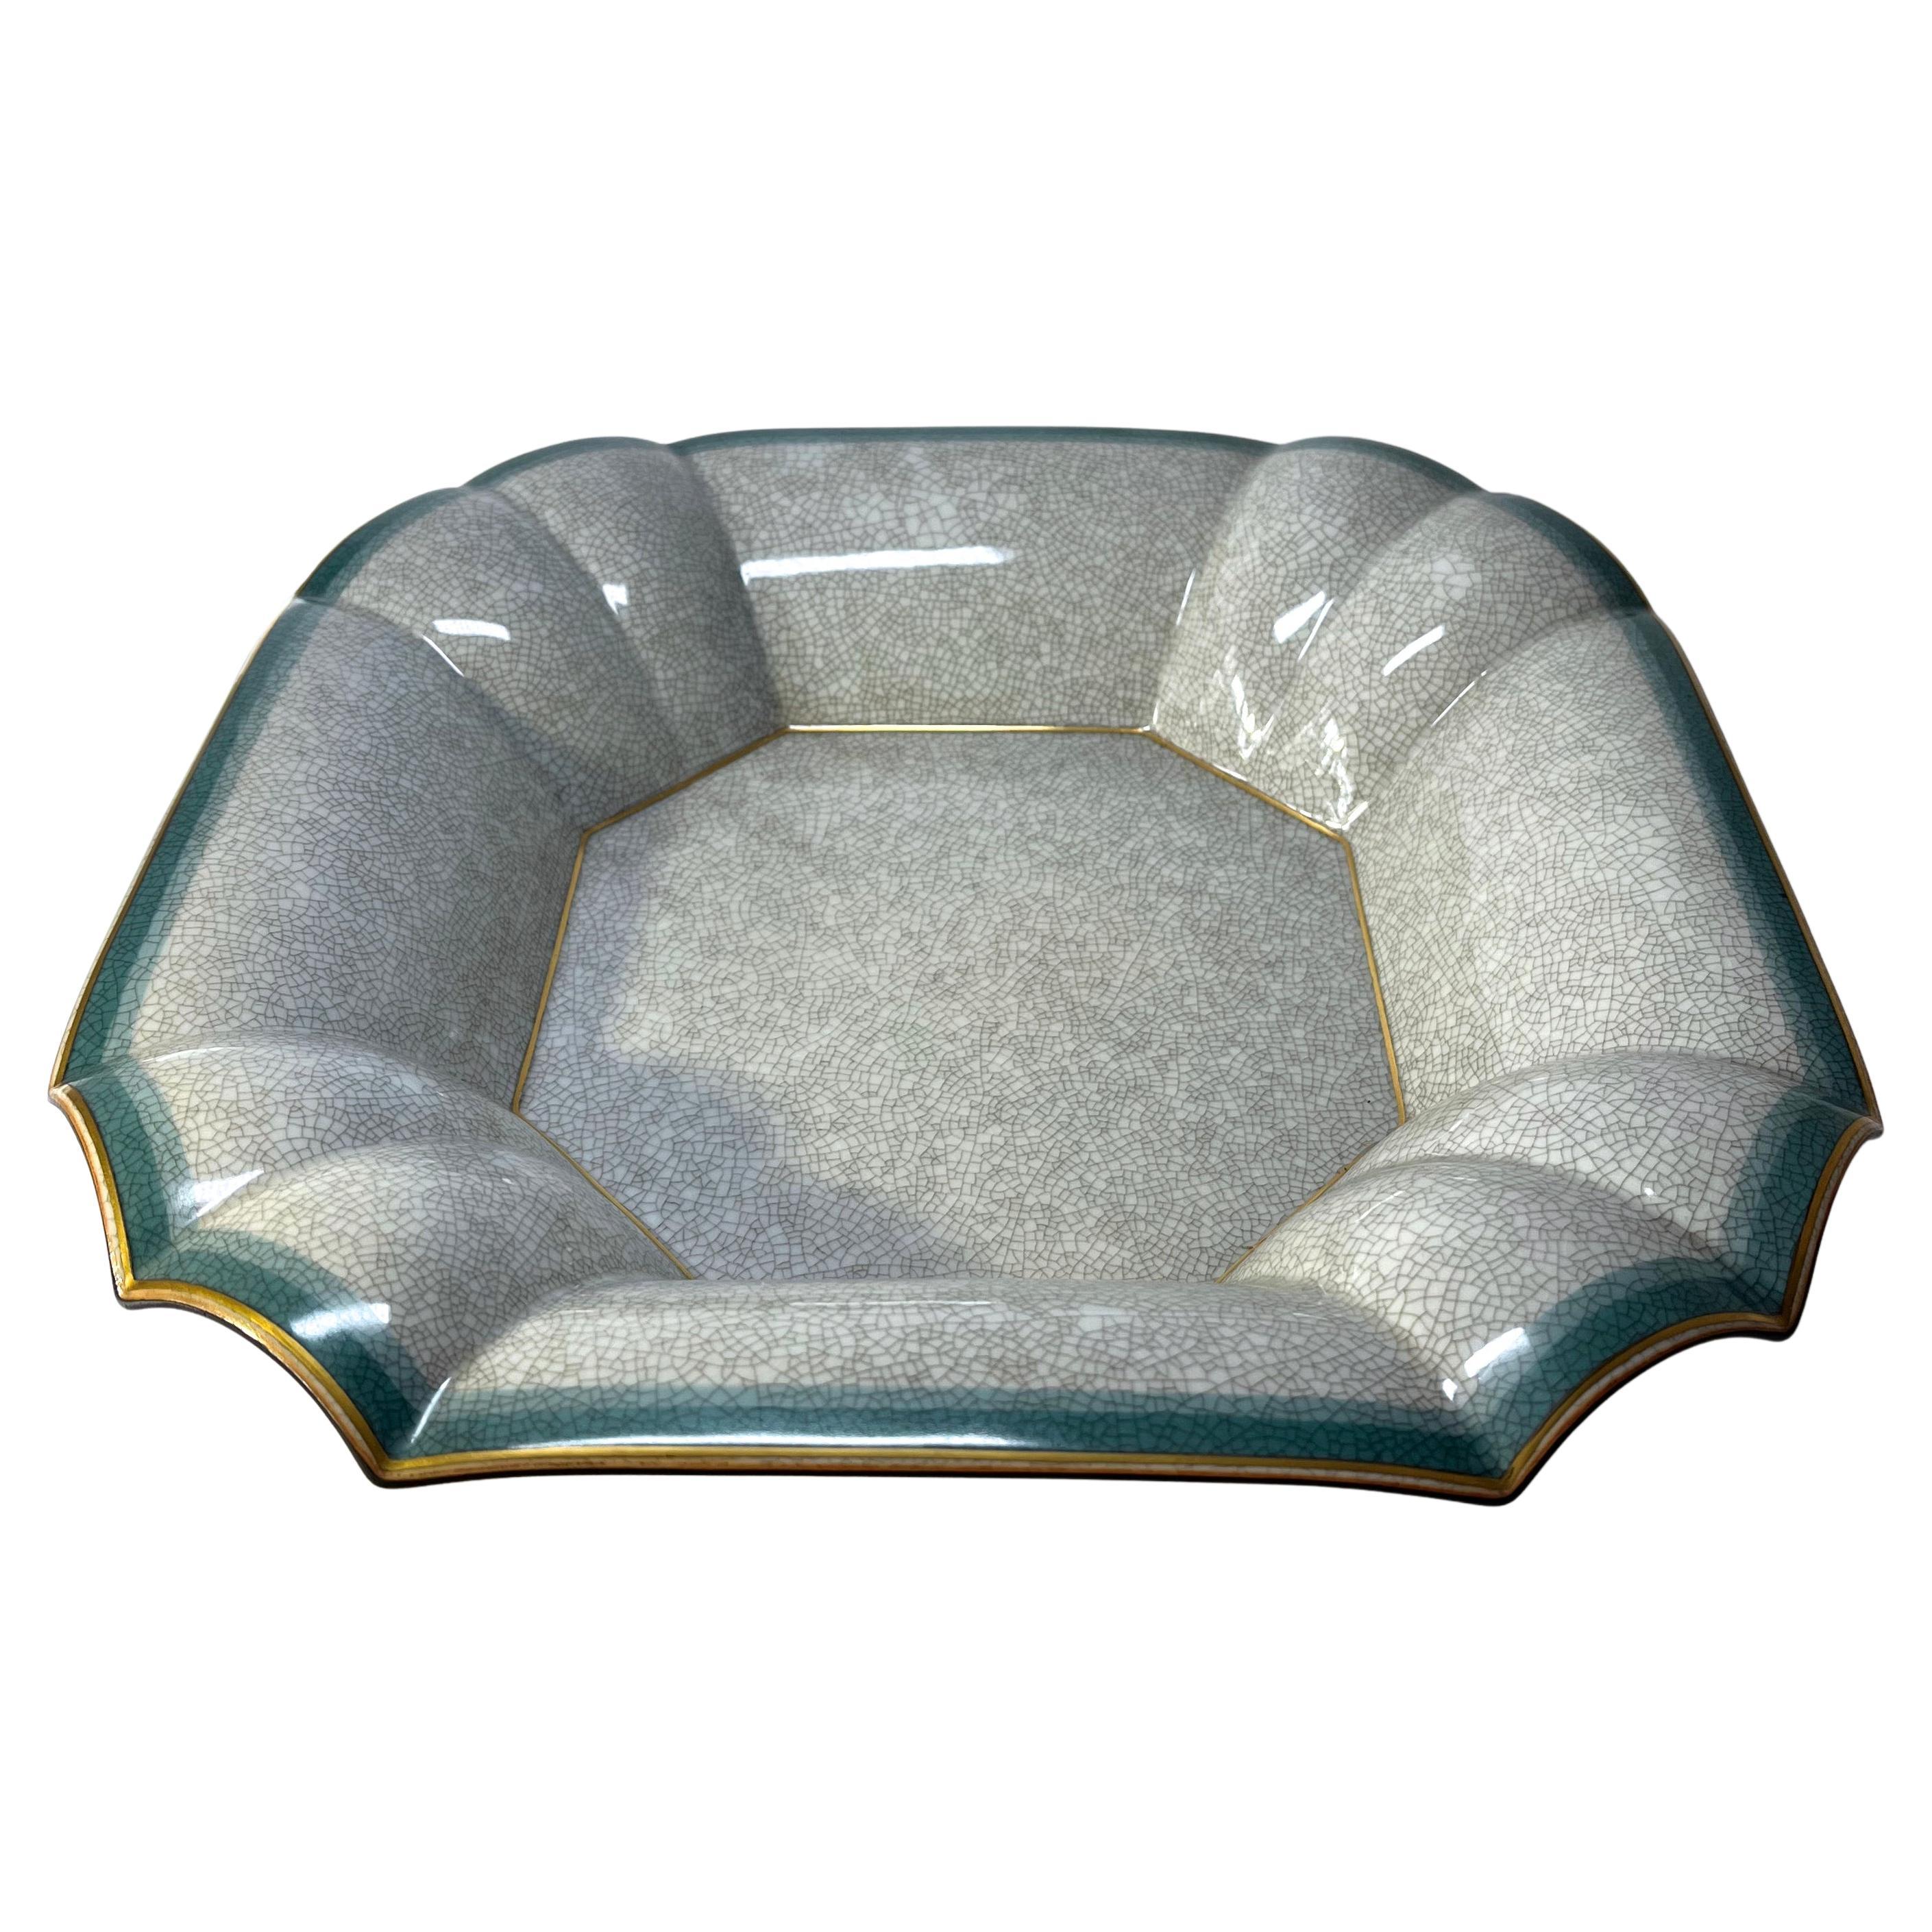 Thorkild Olsen Beautiful Tones Of Teal & Grey, Crackle Glazed Dual Purpose Bowl  im Angebot